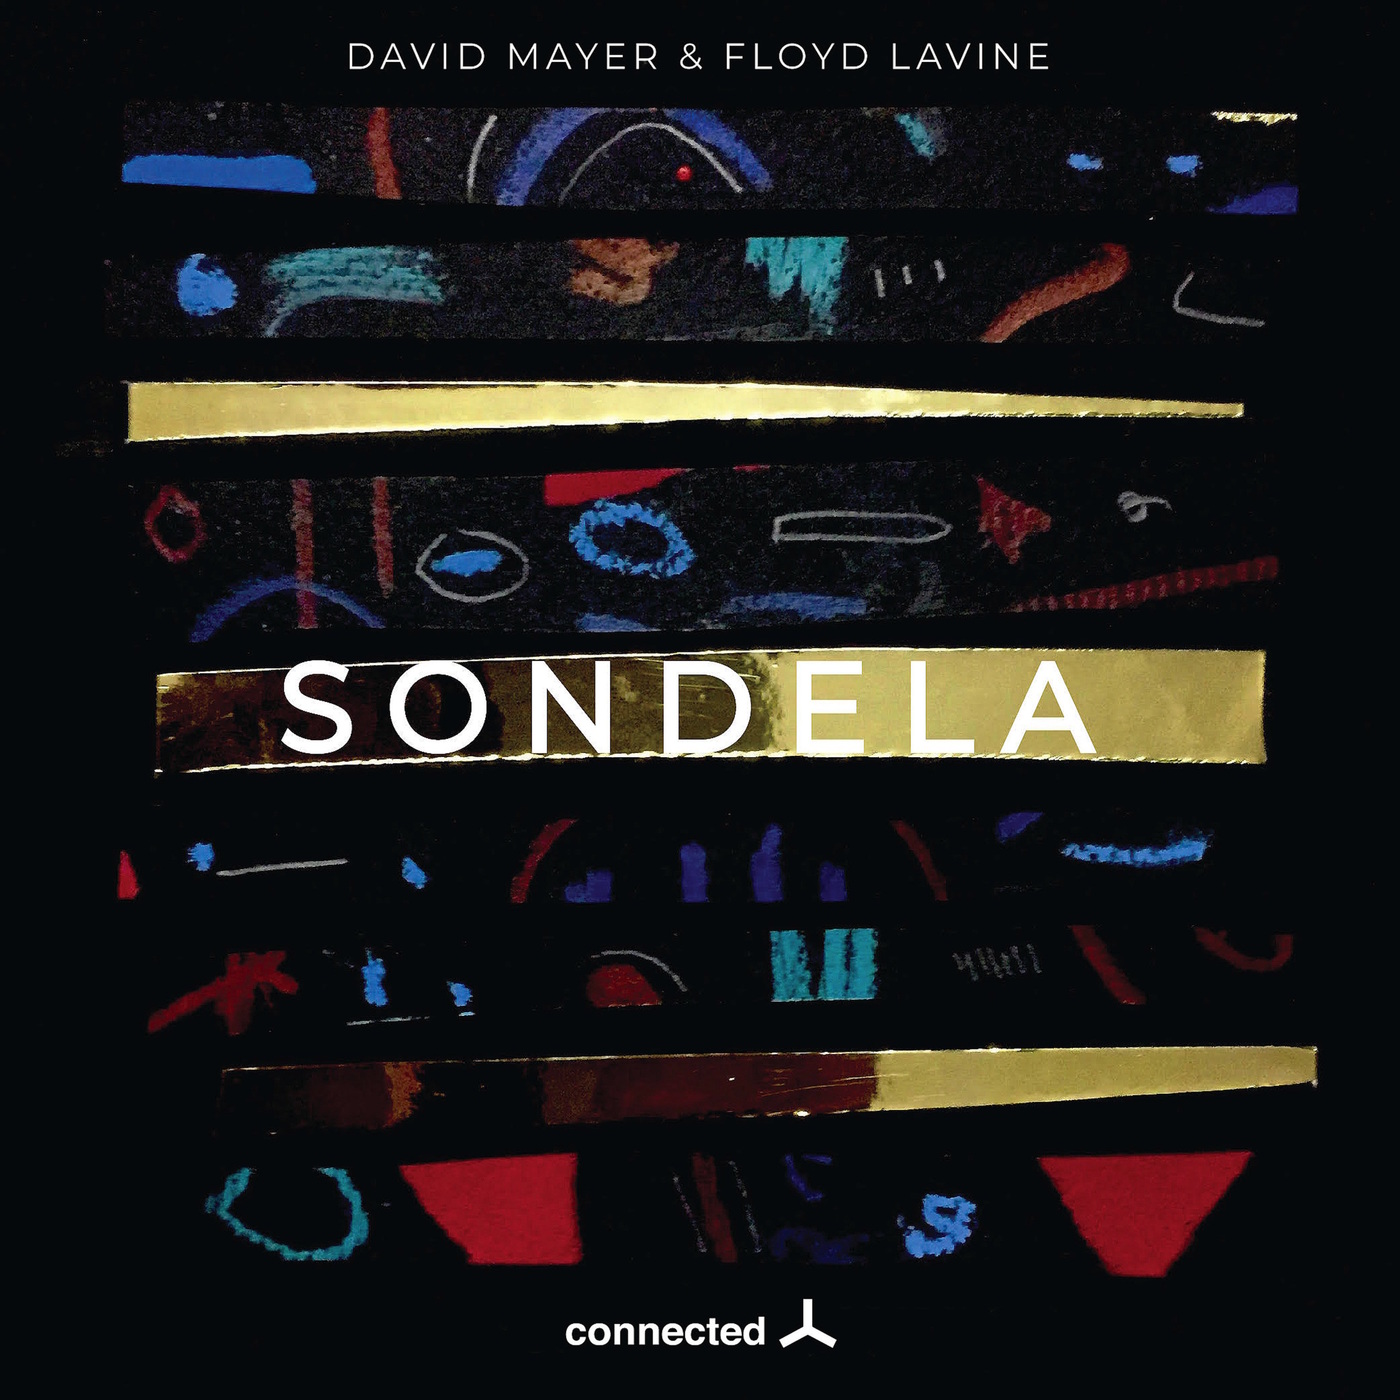 David Mayer & Floyd Lavine - Sondela EP / Connected